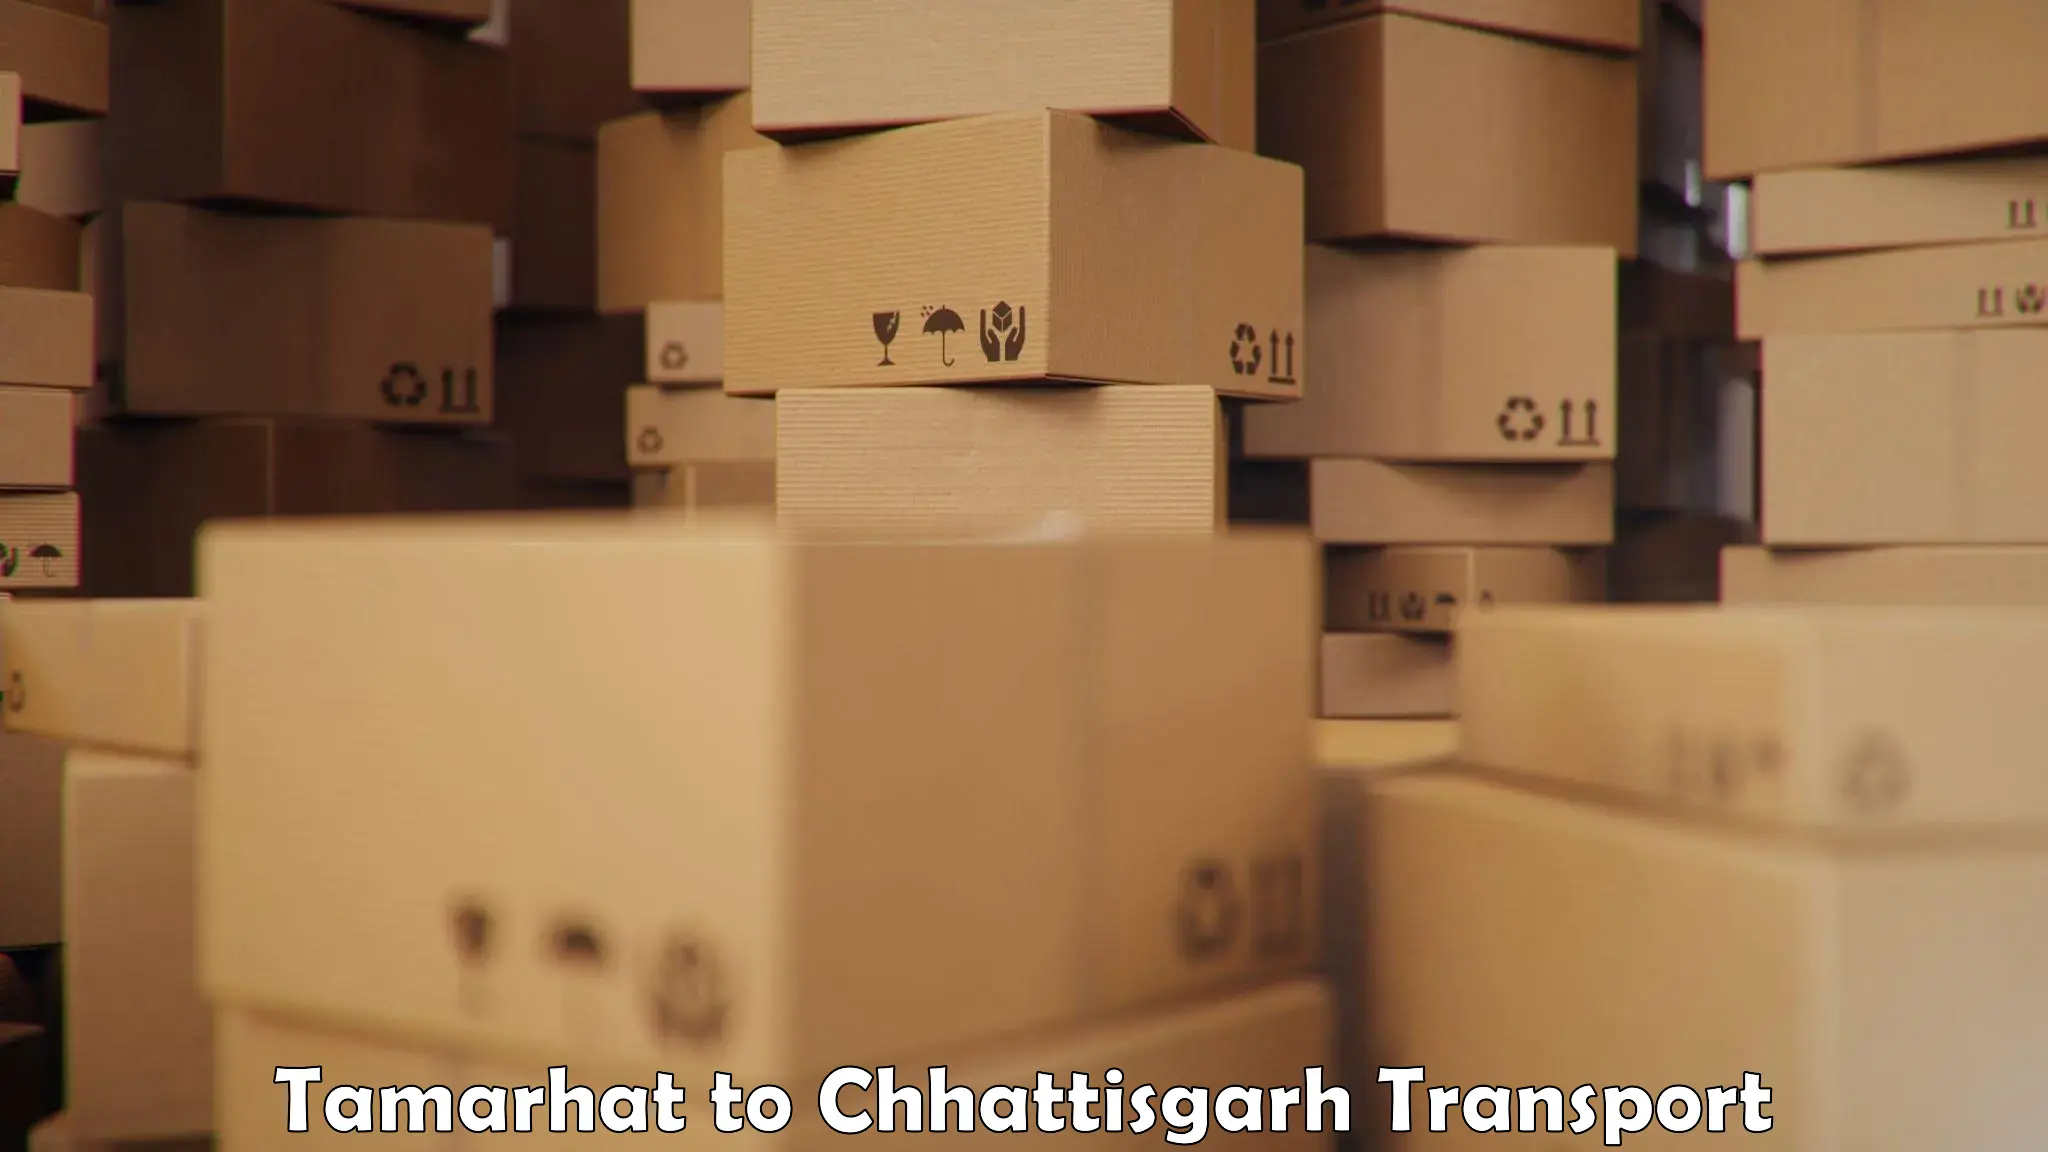 Transport in sharing Tamarhat to Chhattisgarh